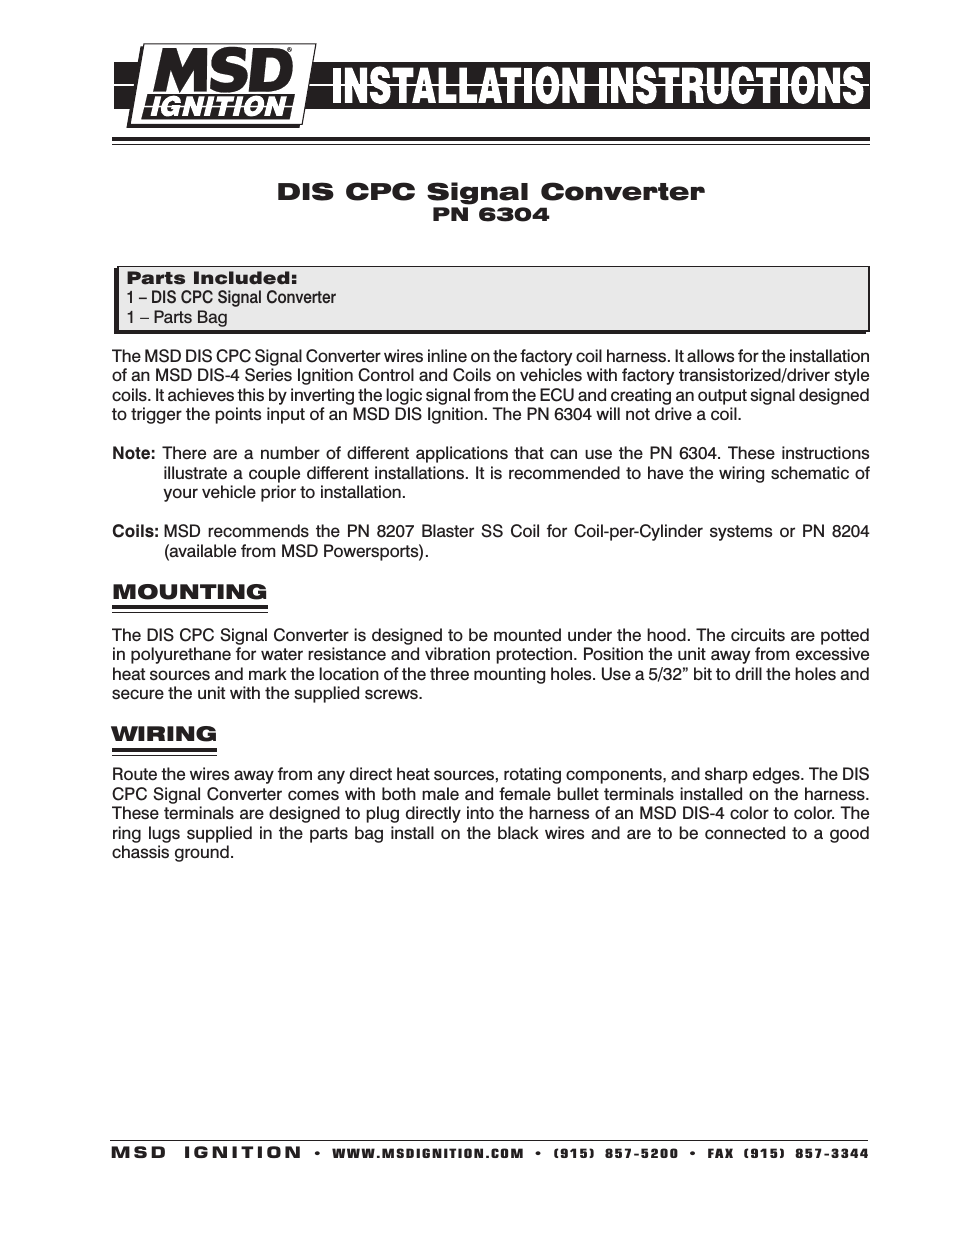 6304 DIS CPC Signal Converter, 4 Channel Installation